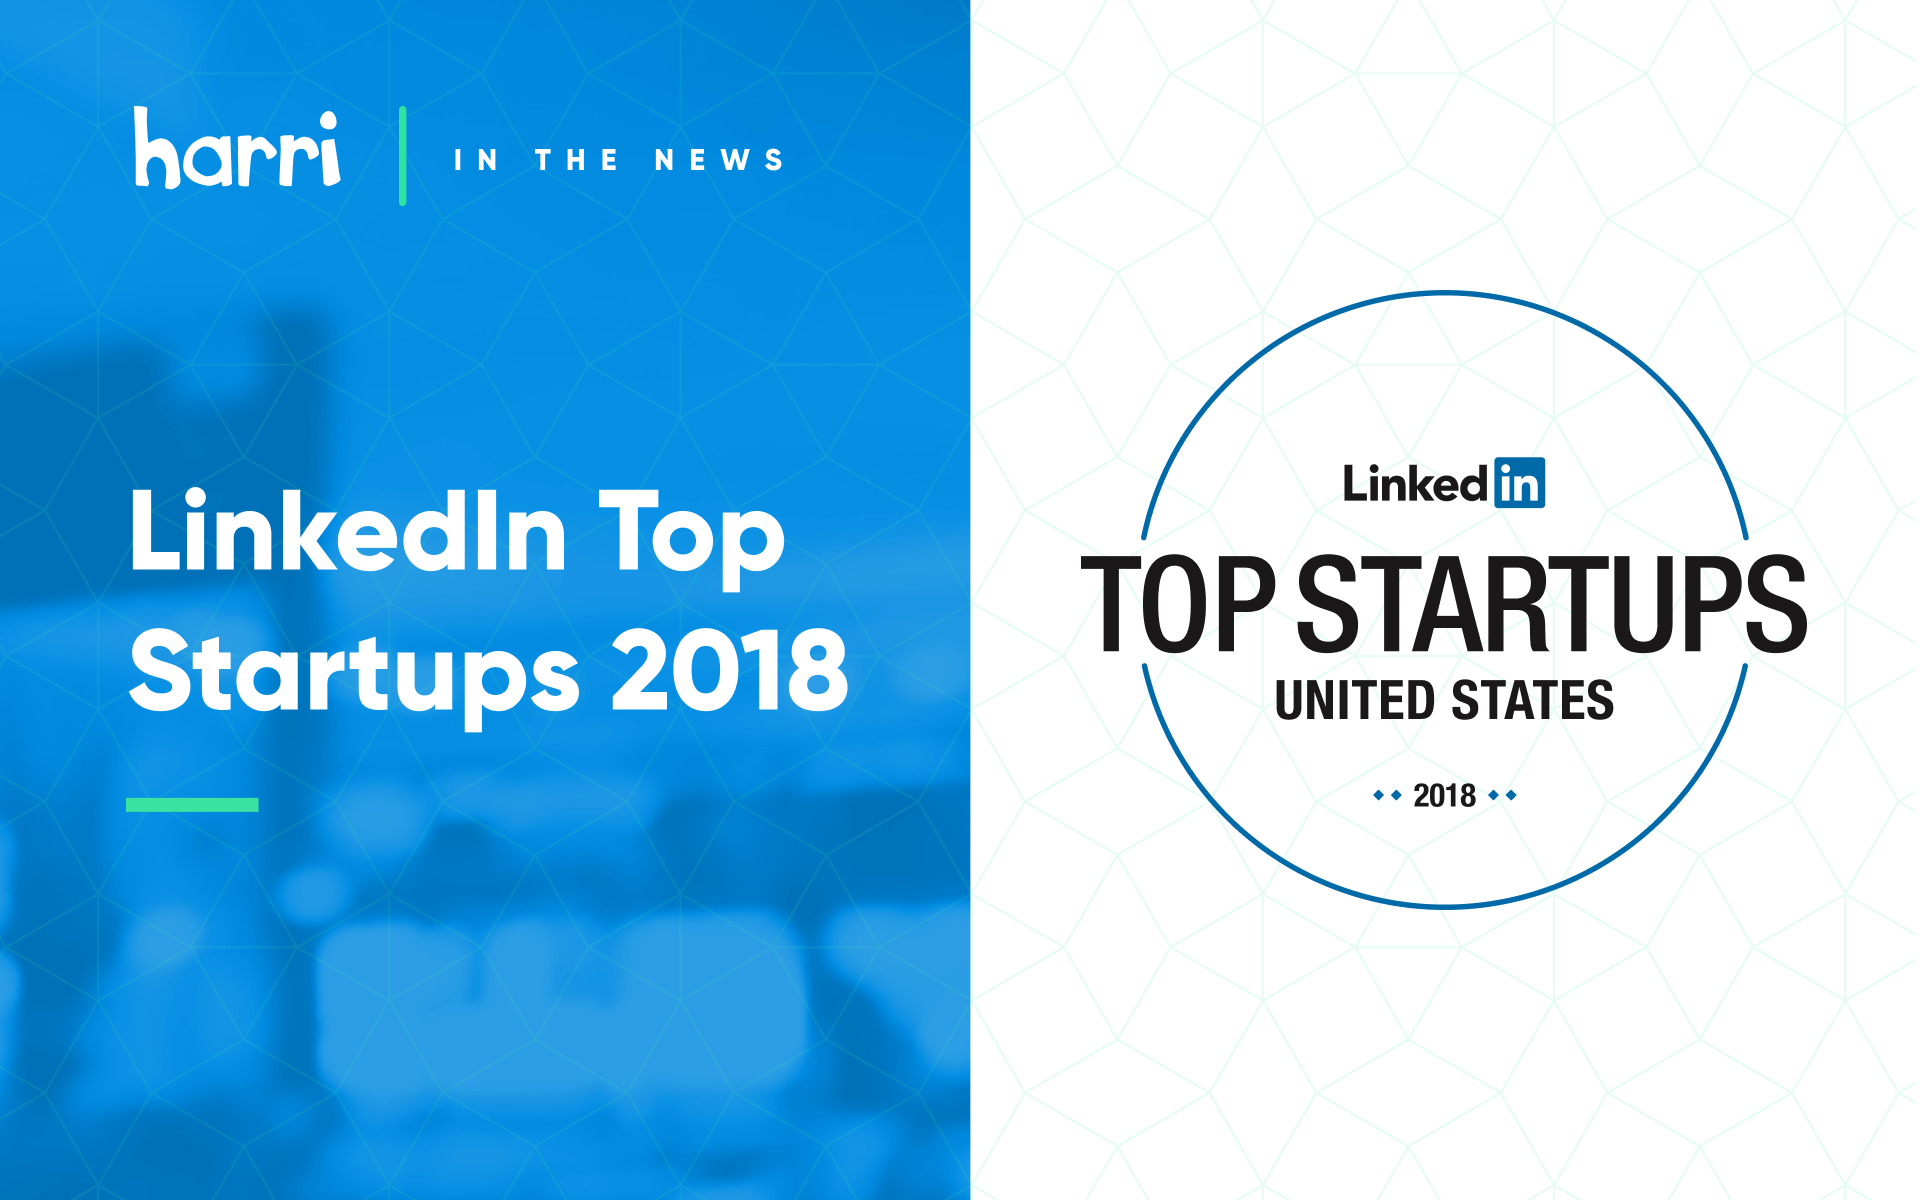 Harri Included in Top 50 Startups of 218 by LinkedIn | Harri Insider